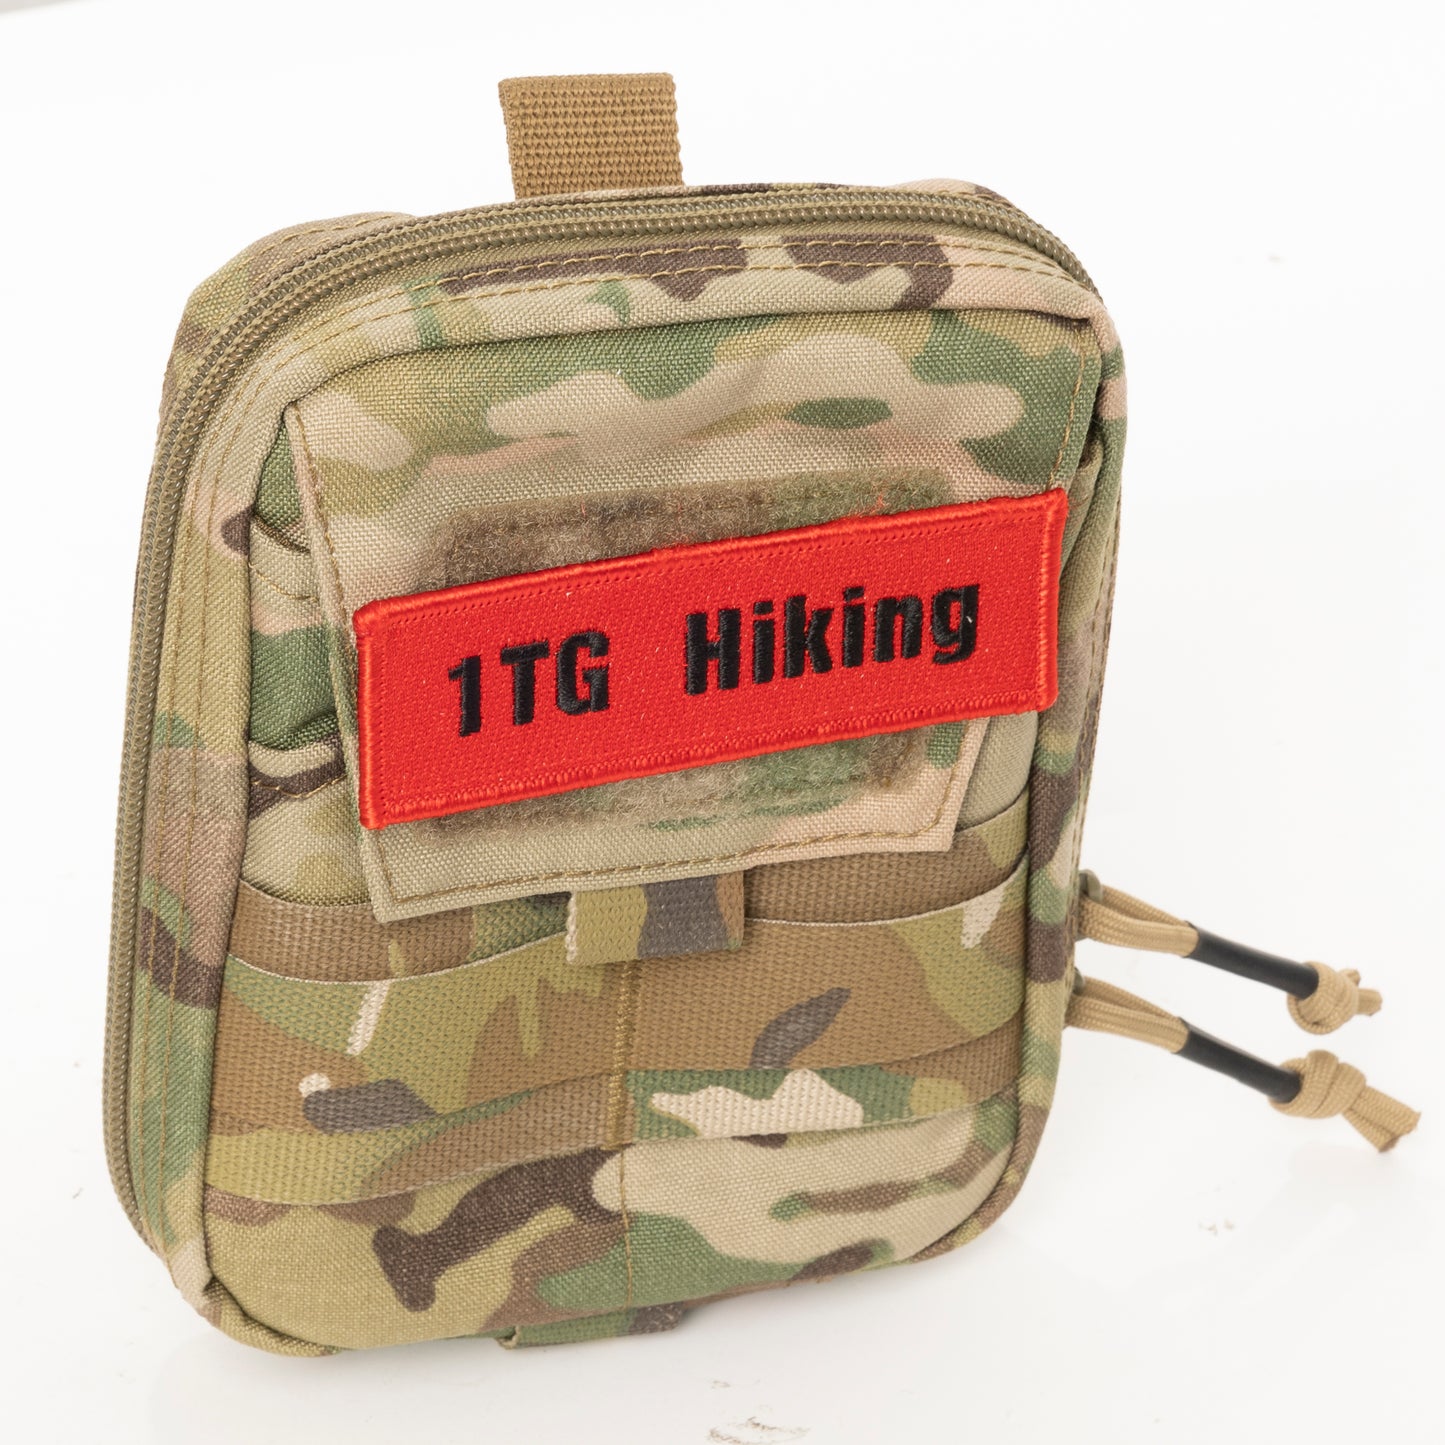 1TG HIKING Outdoor Bag